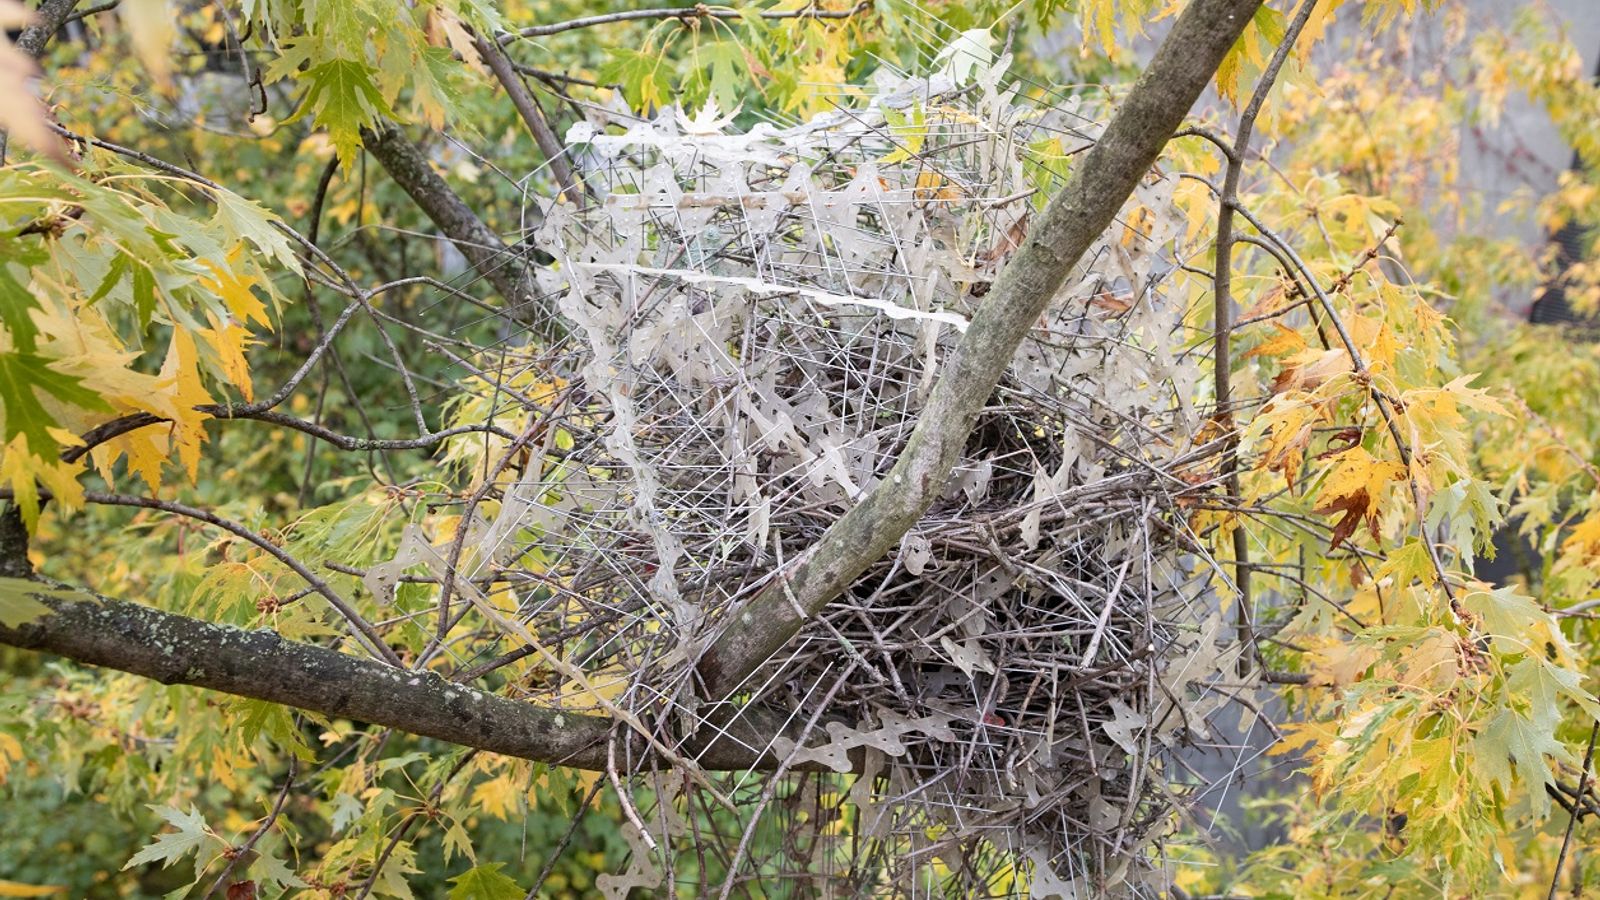 Magpie nest made of anti-bird spikes. Pic: Auke-Florian Hiemstra